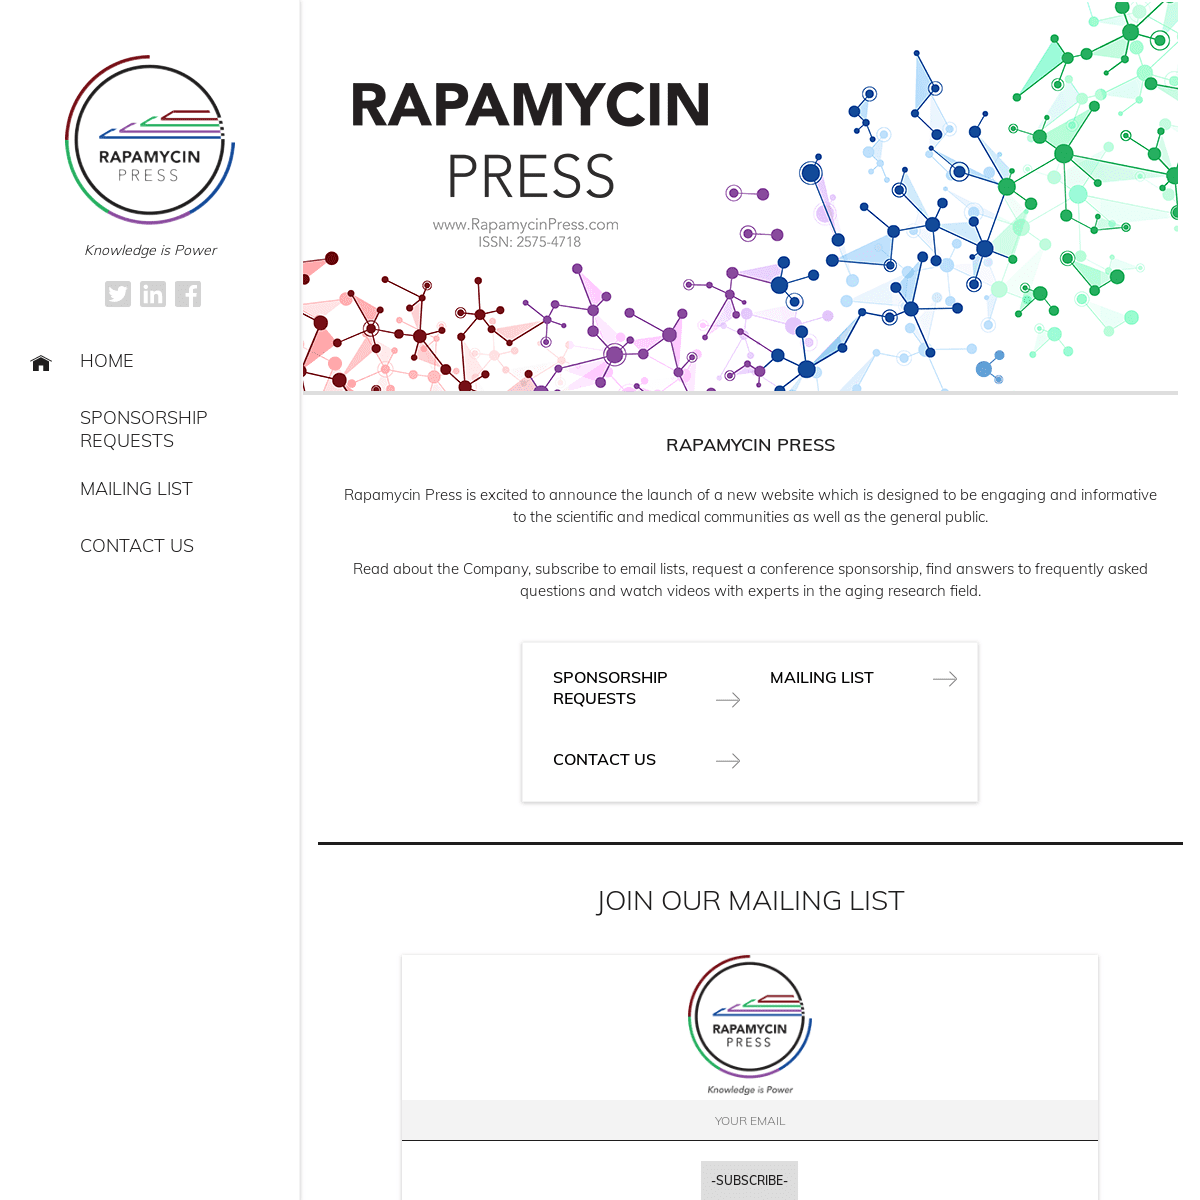 A complete backup of rapamycinpress.com